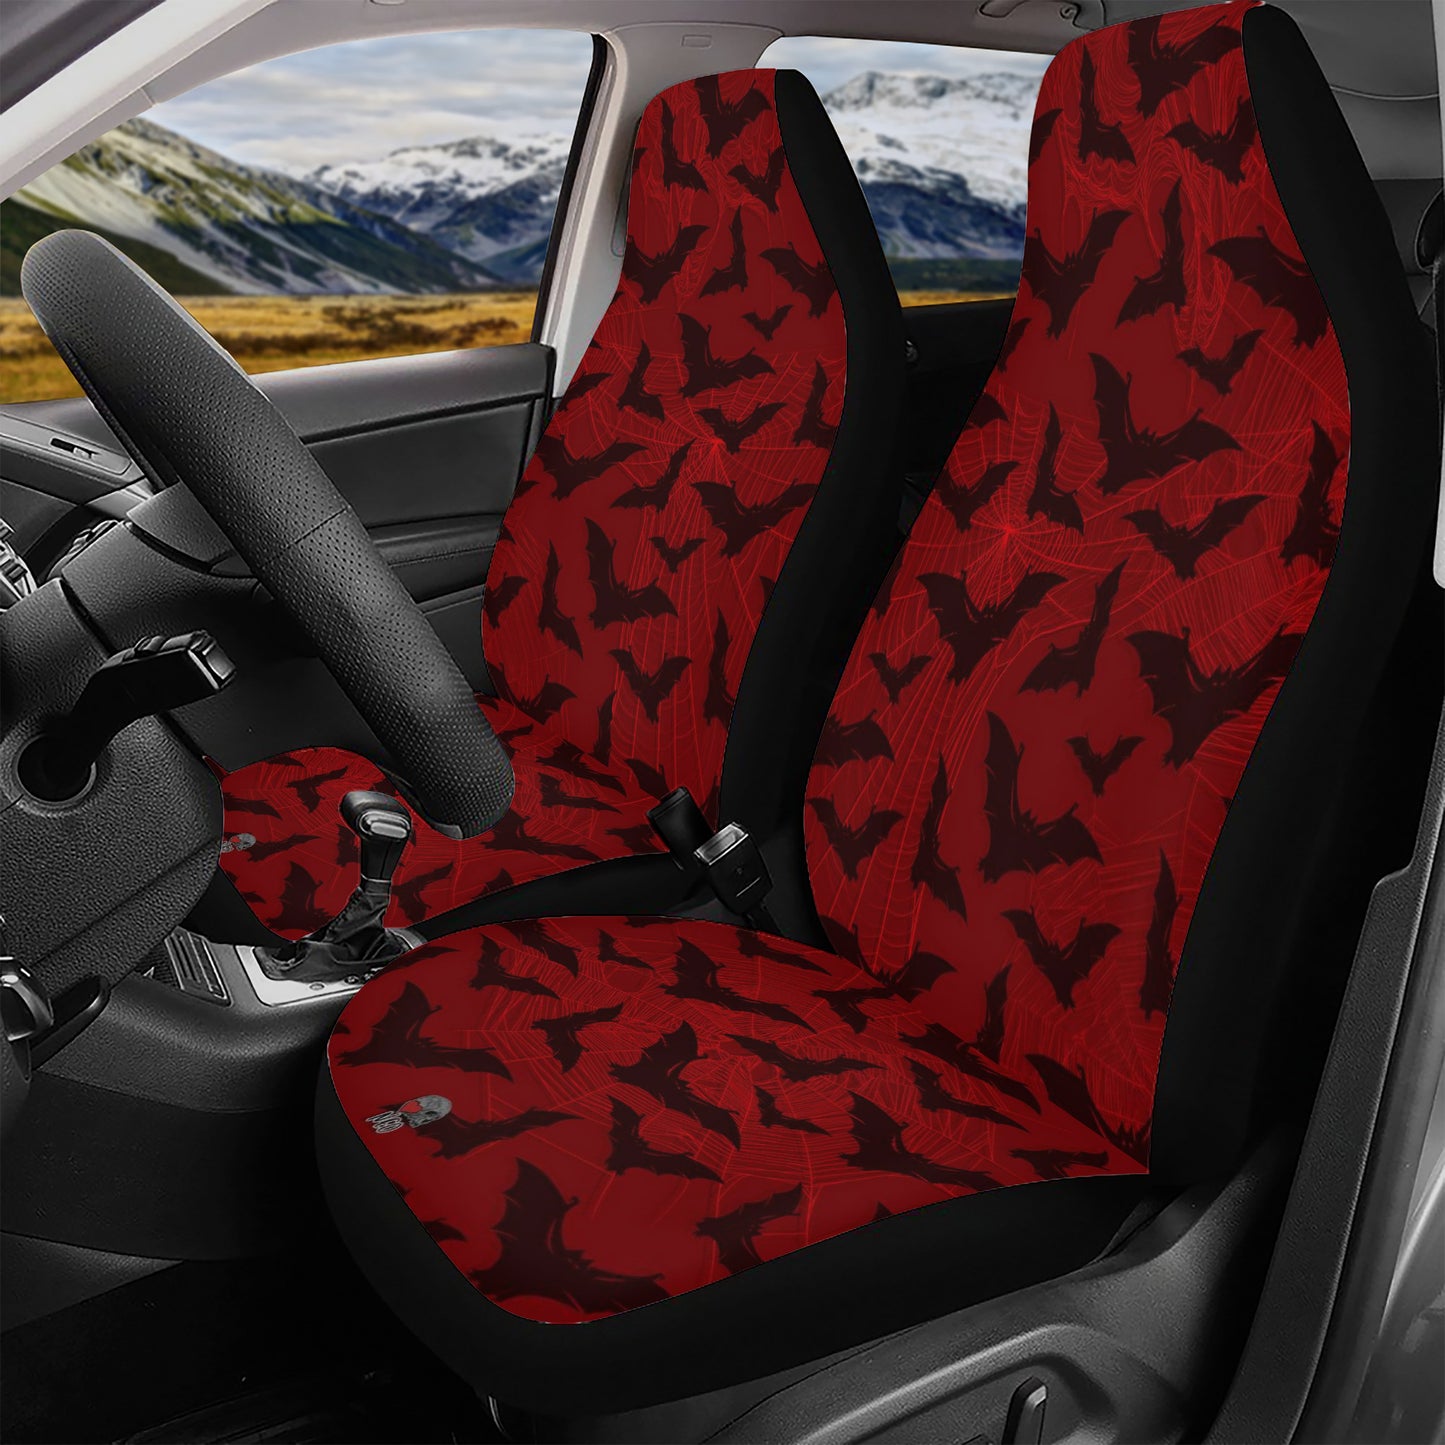 Rubin bats swarm Full Car Seat Cover Set